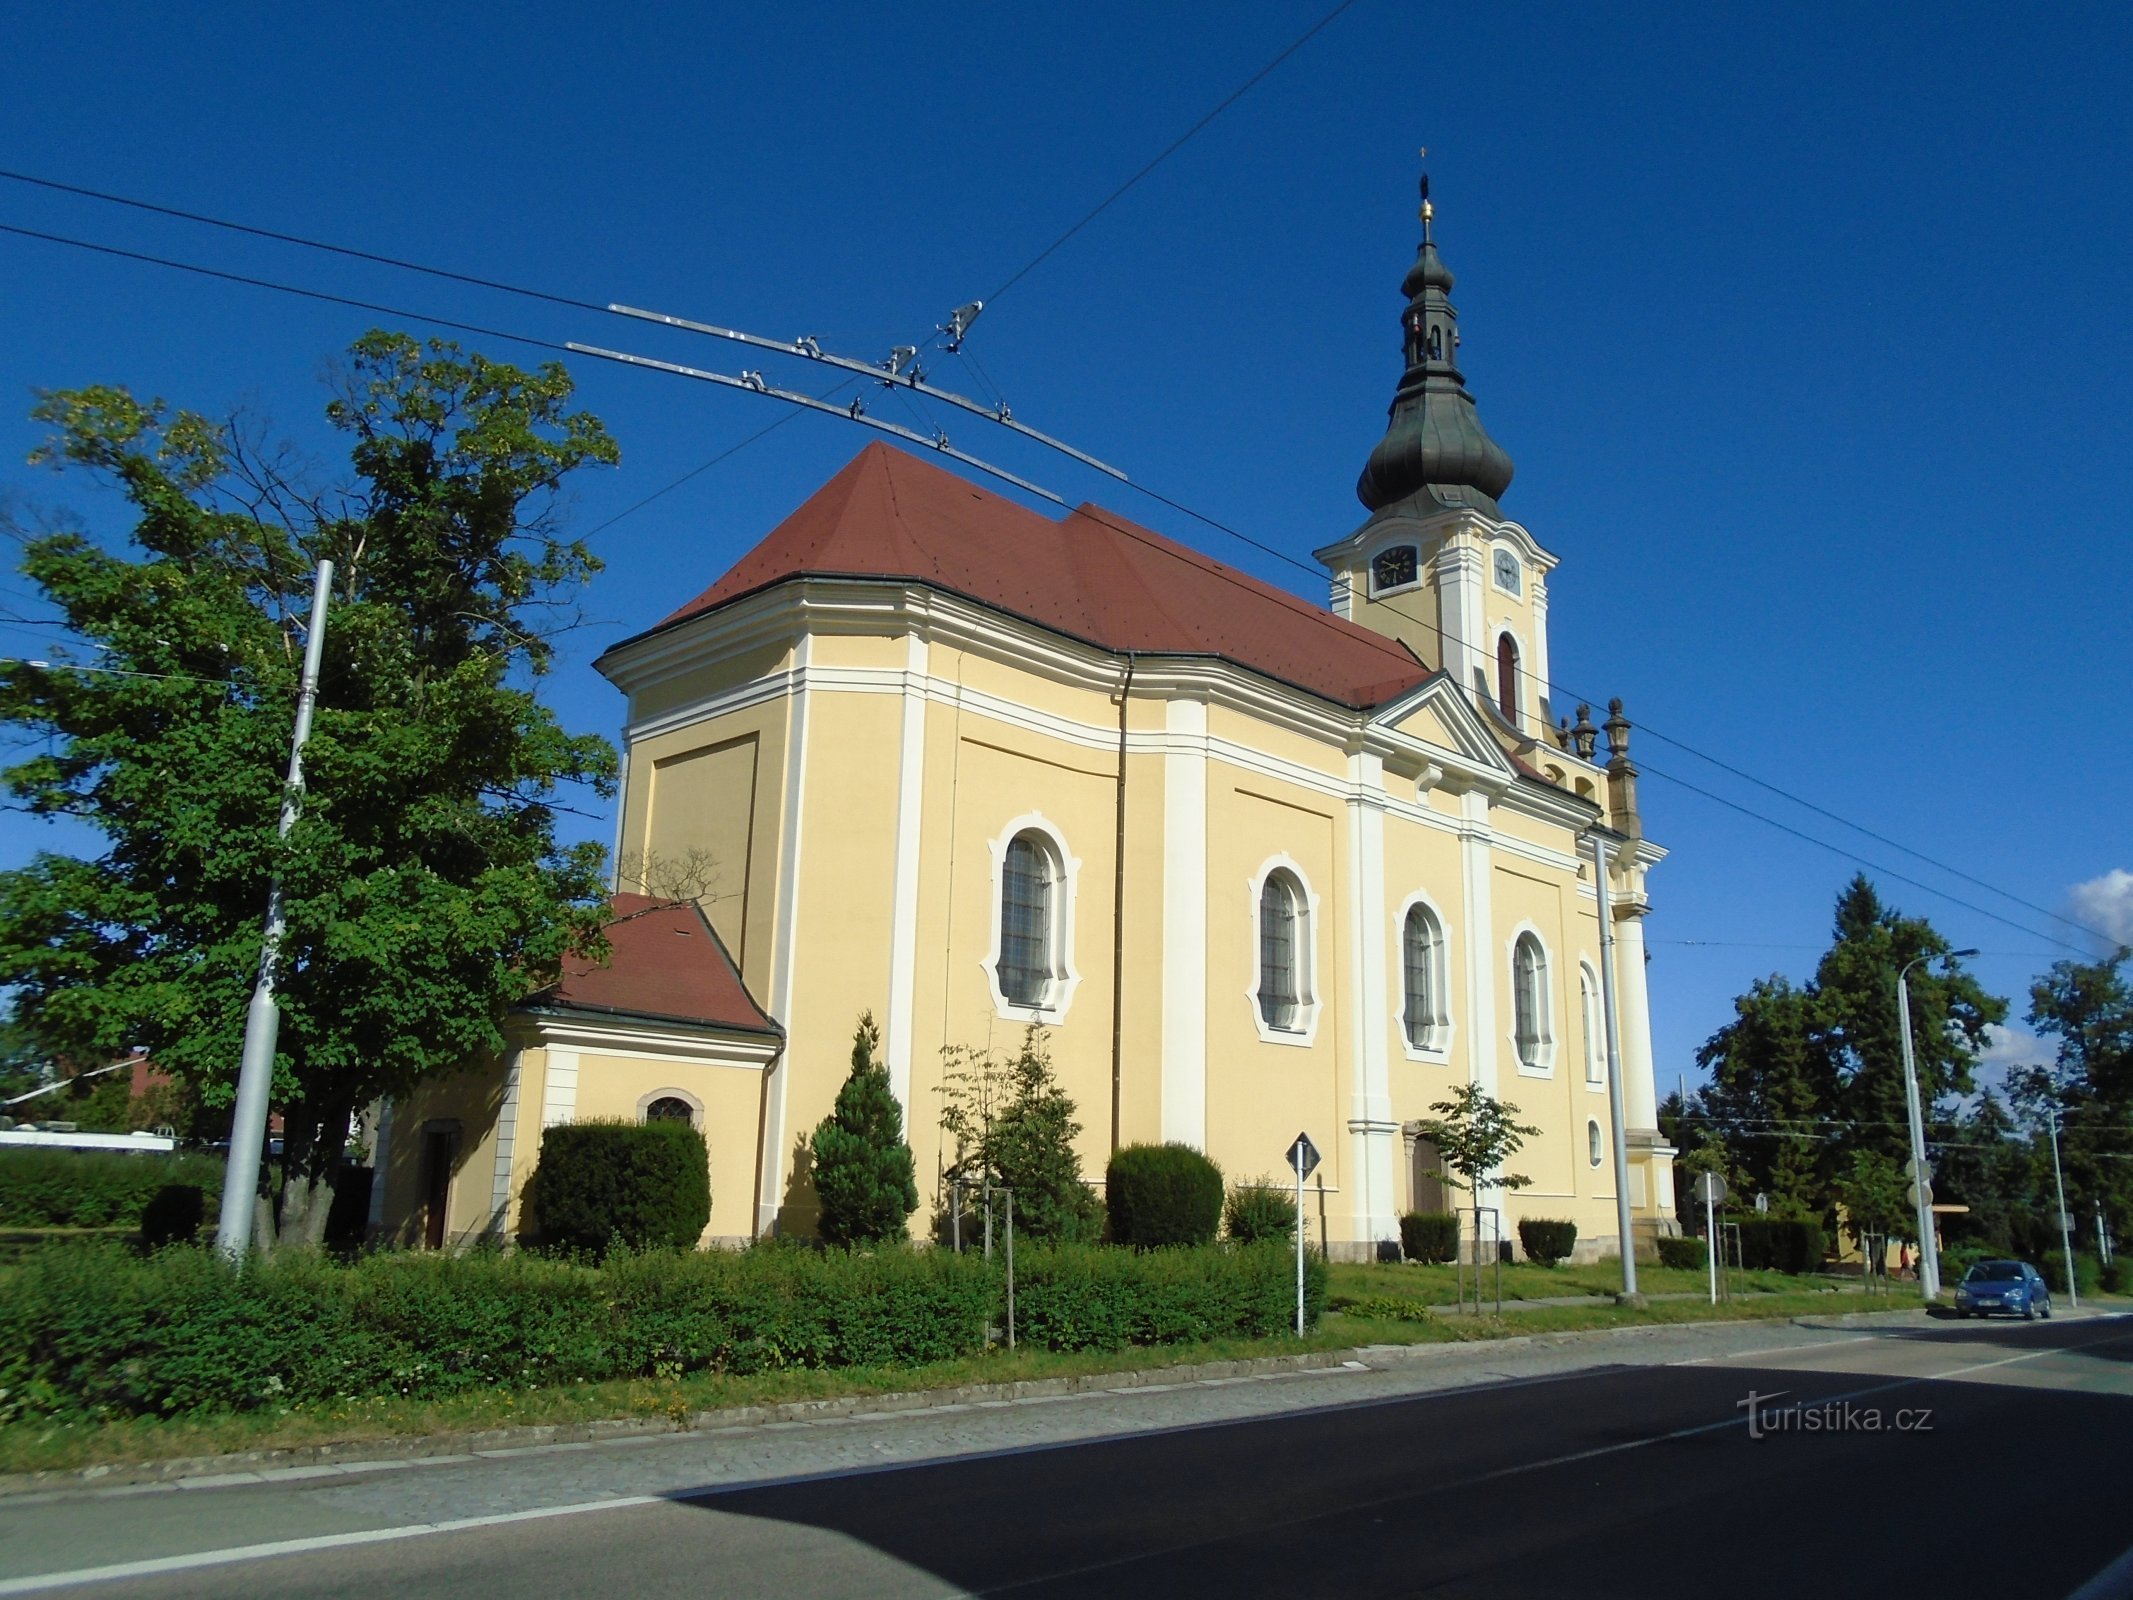 Kostel sv. Antonína, Hradec Králové, 1.7.2018)